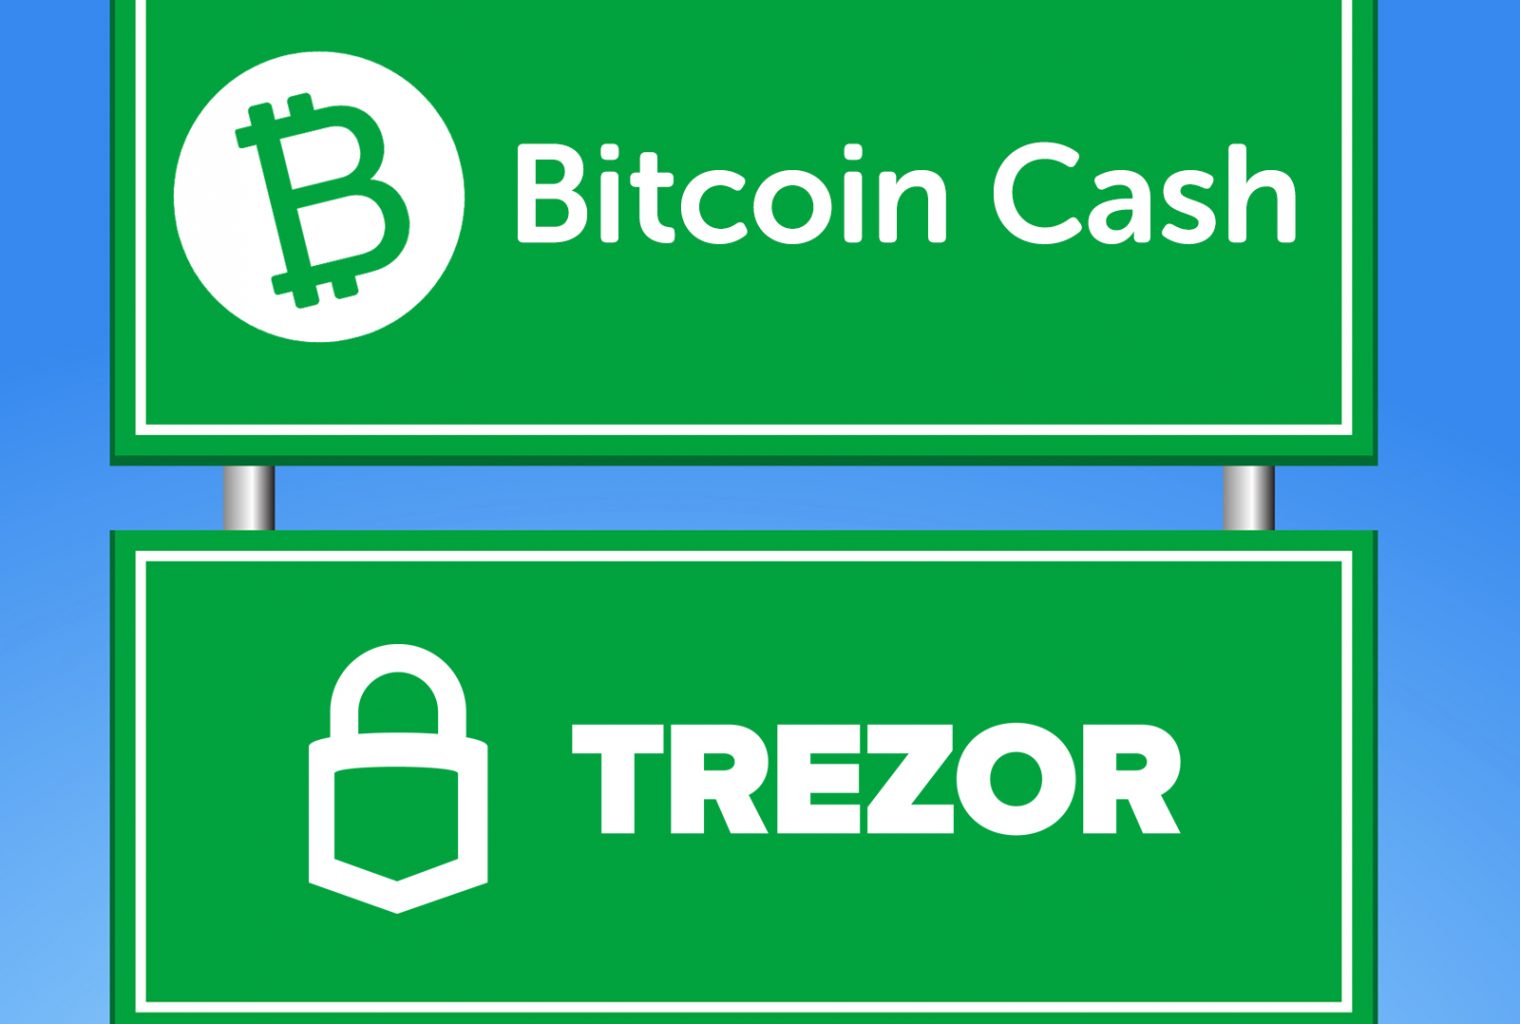 Trezor To Implement Bitcoin Cash Addresses Bitcoin News - 